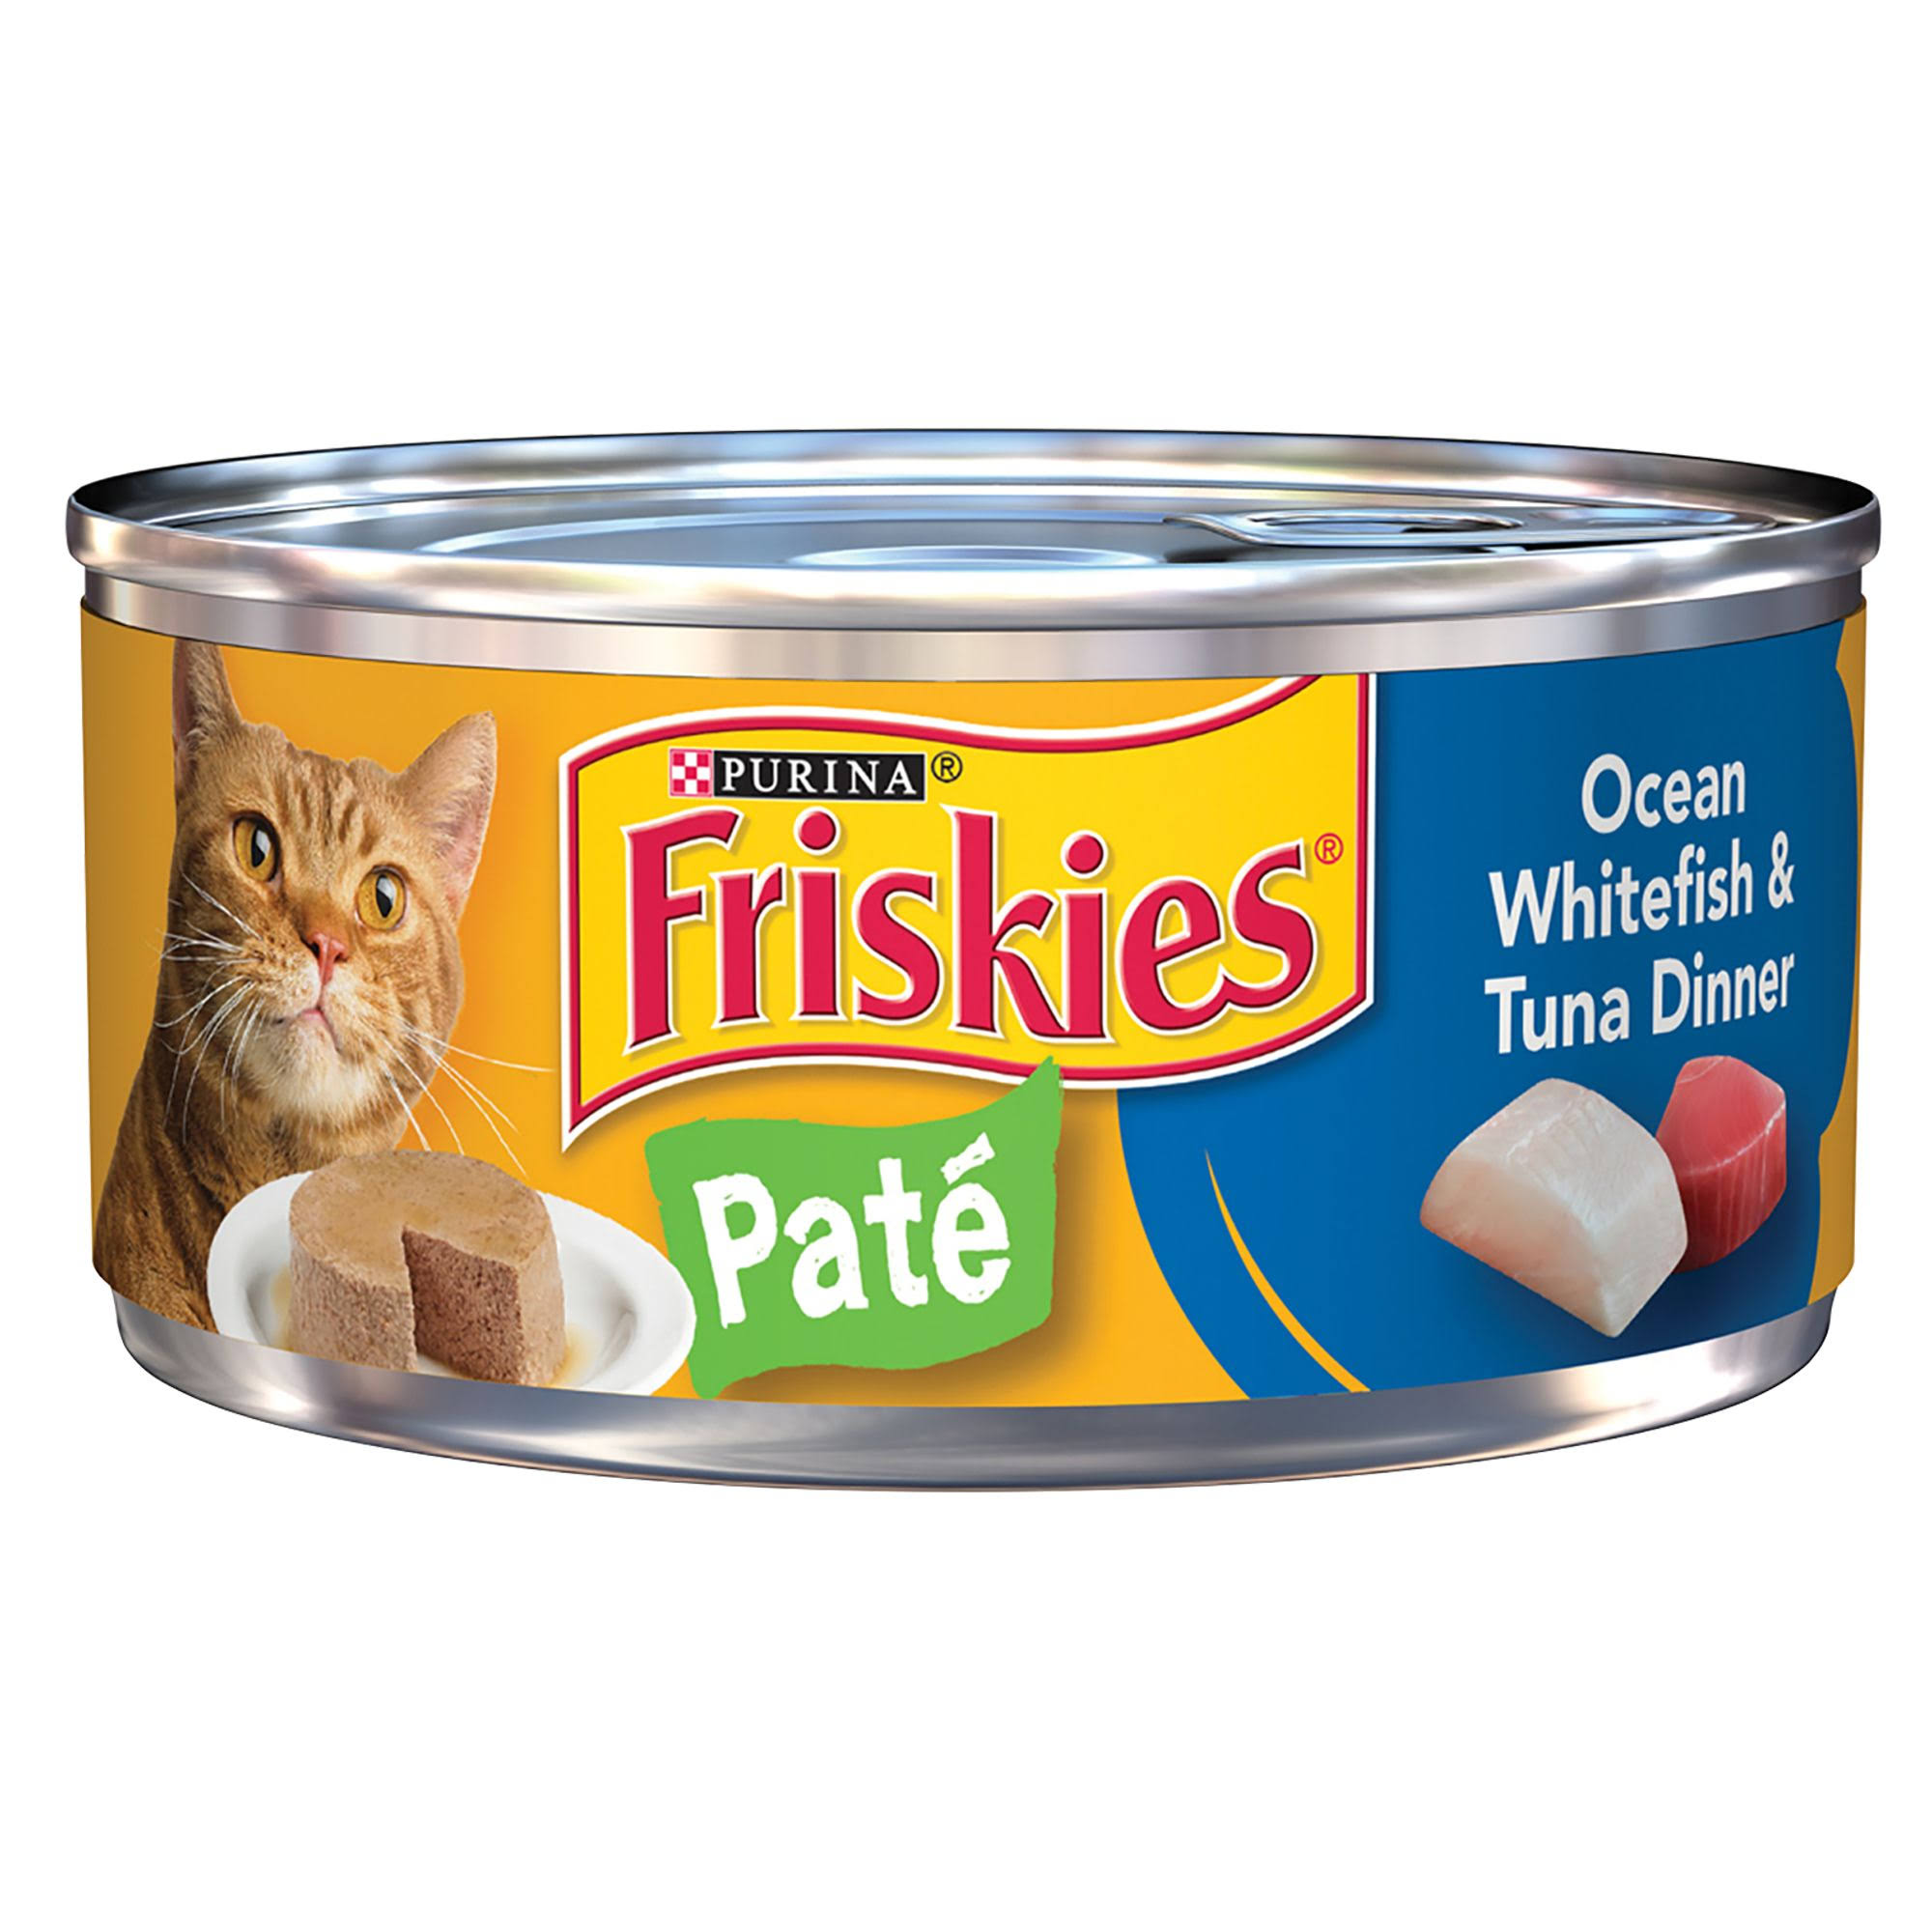 Purina Friskies Classic Cat Pate - Ocean Whitefish & Tuna, 5.5oz